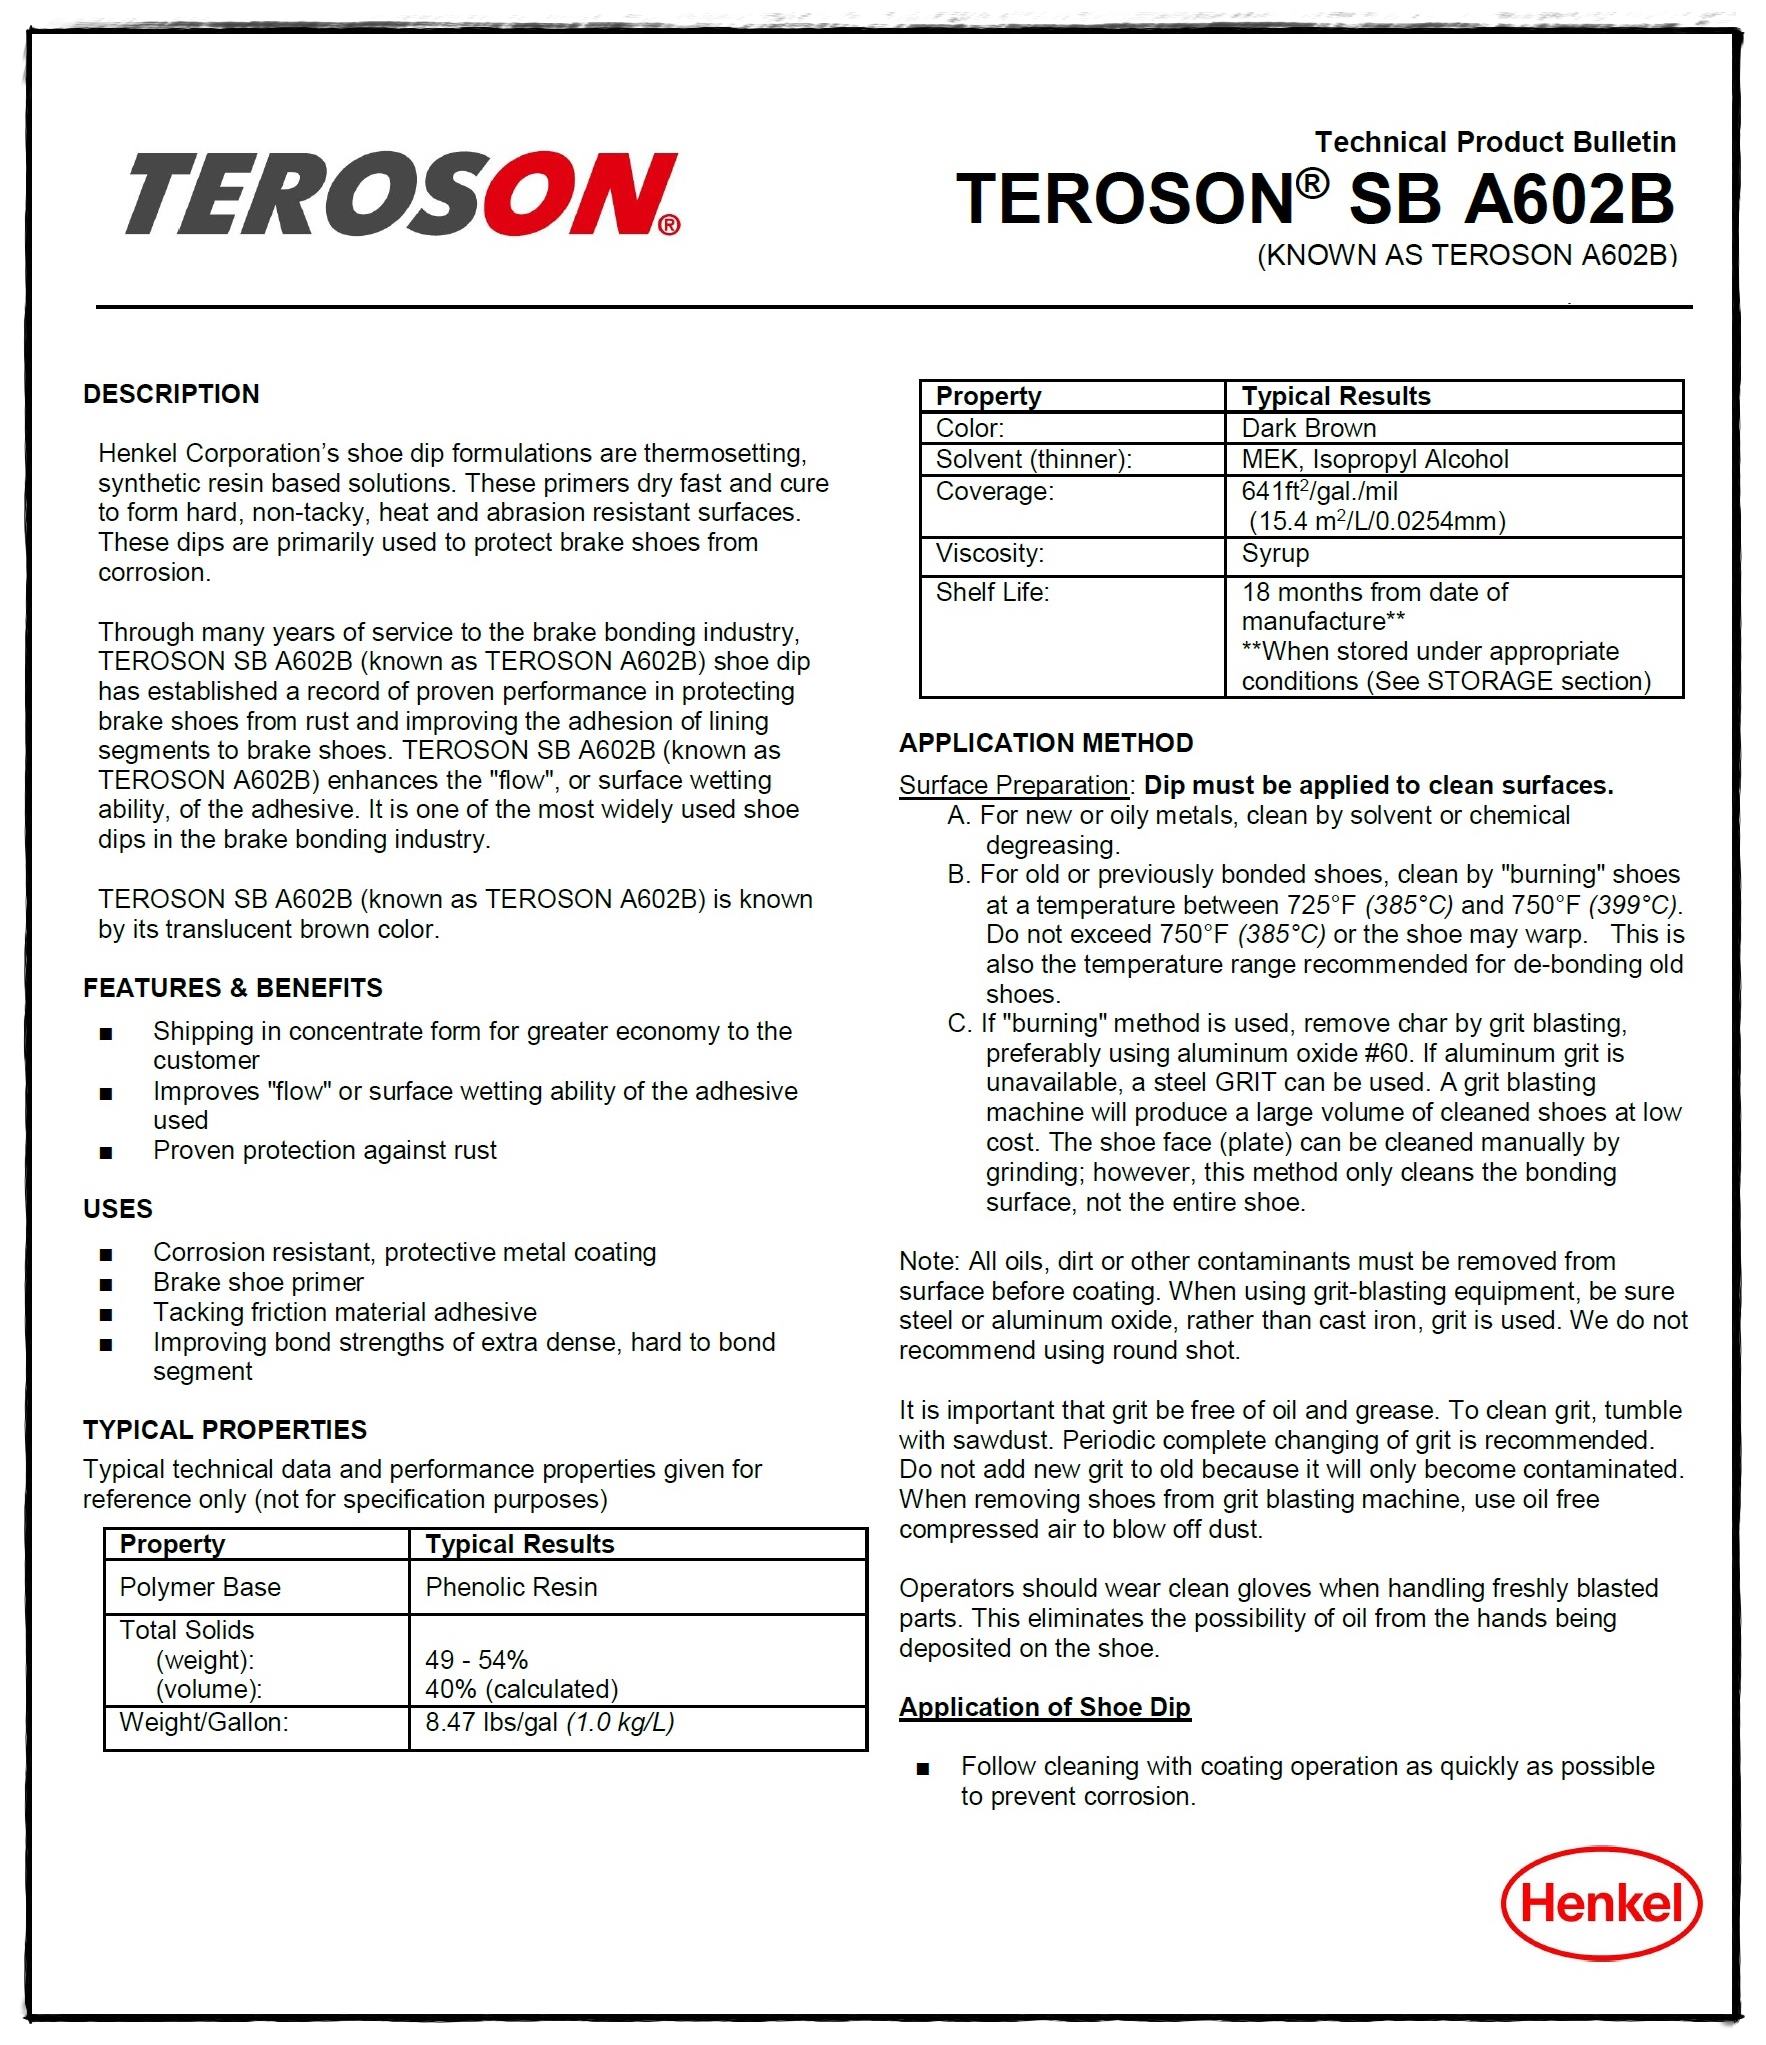 TEROSON SB A602B